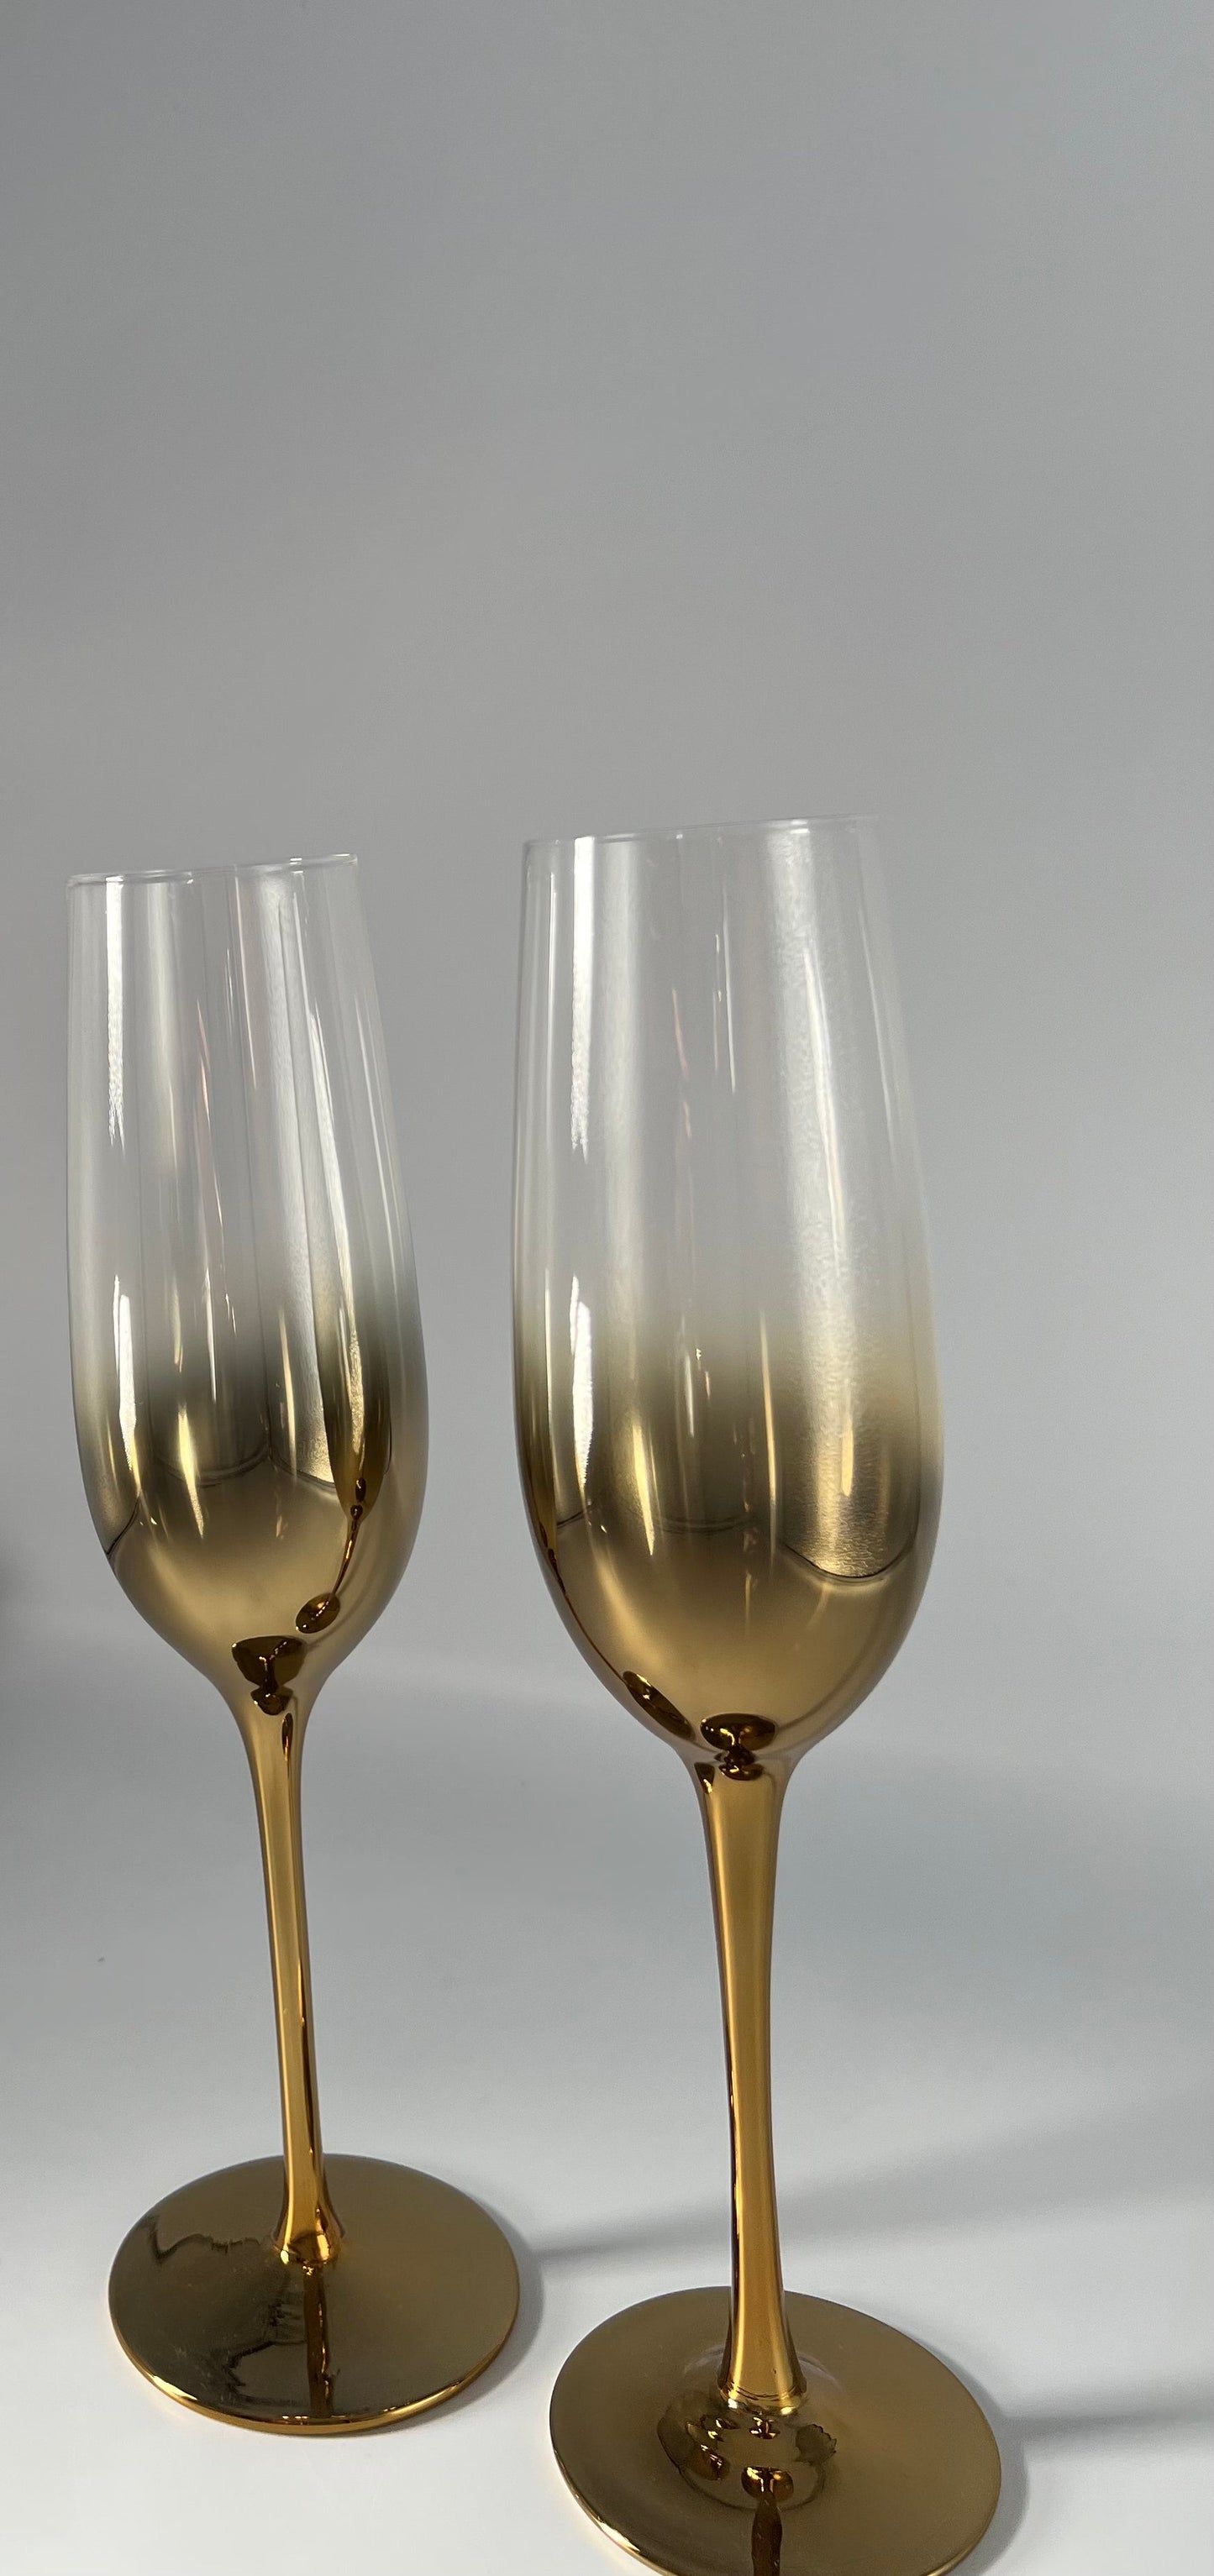 LADY - Grande flûte à champagne or - bninside